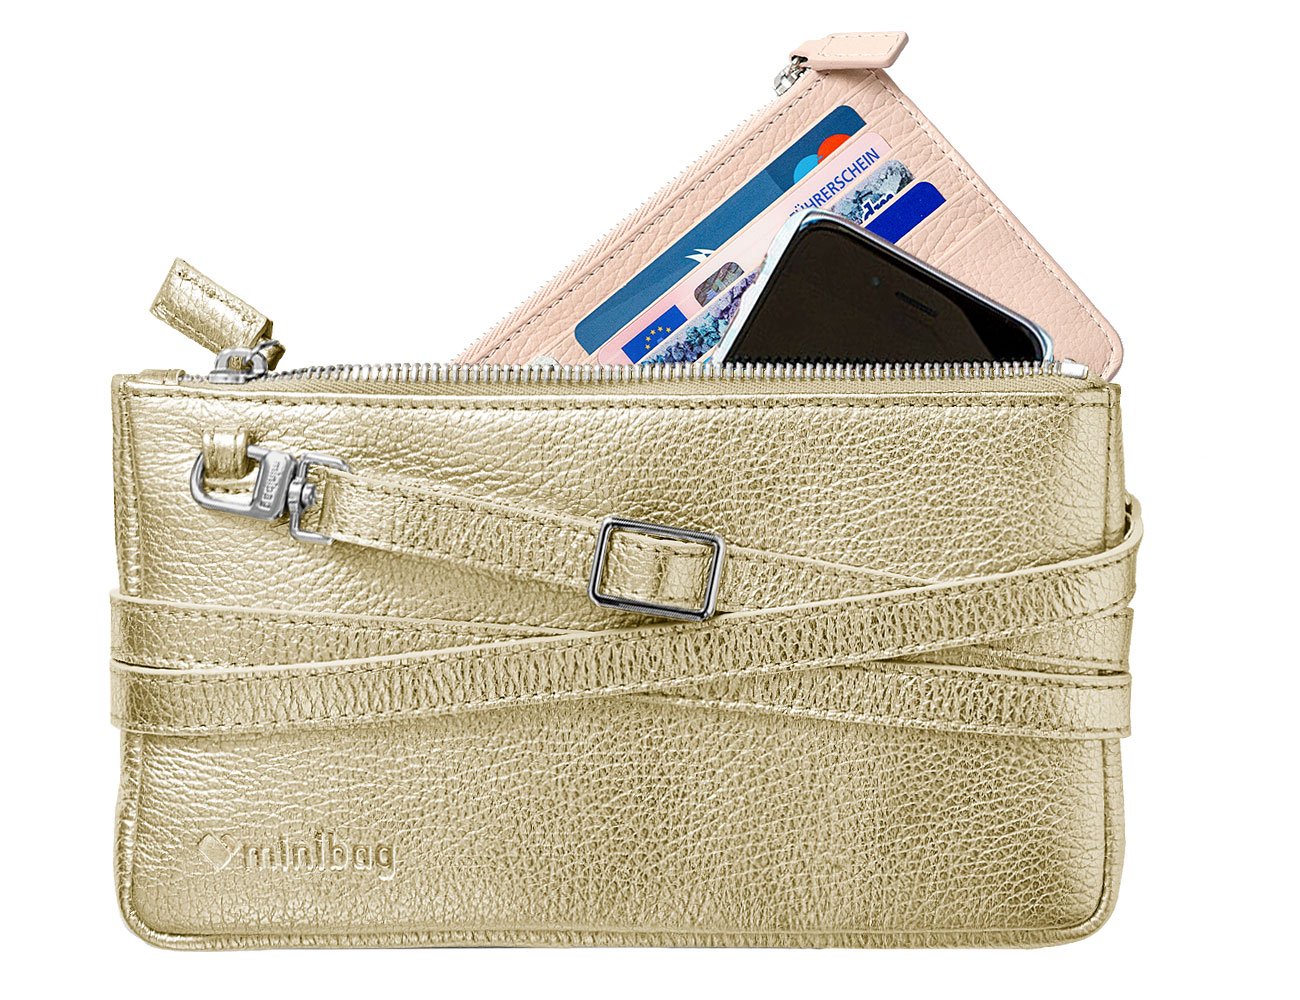 minibag metallic gold, Ledertasche gold, minibag Wallet nude, Clutch gold, Geldtasche zum Umhängen